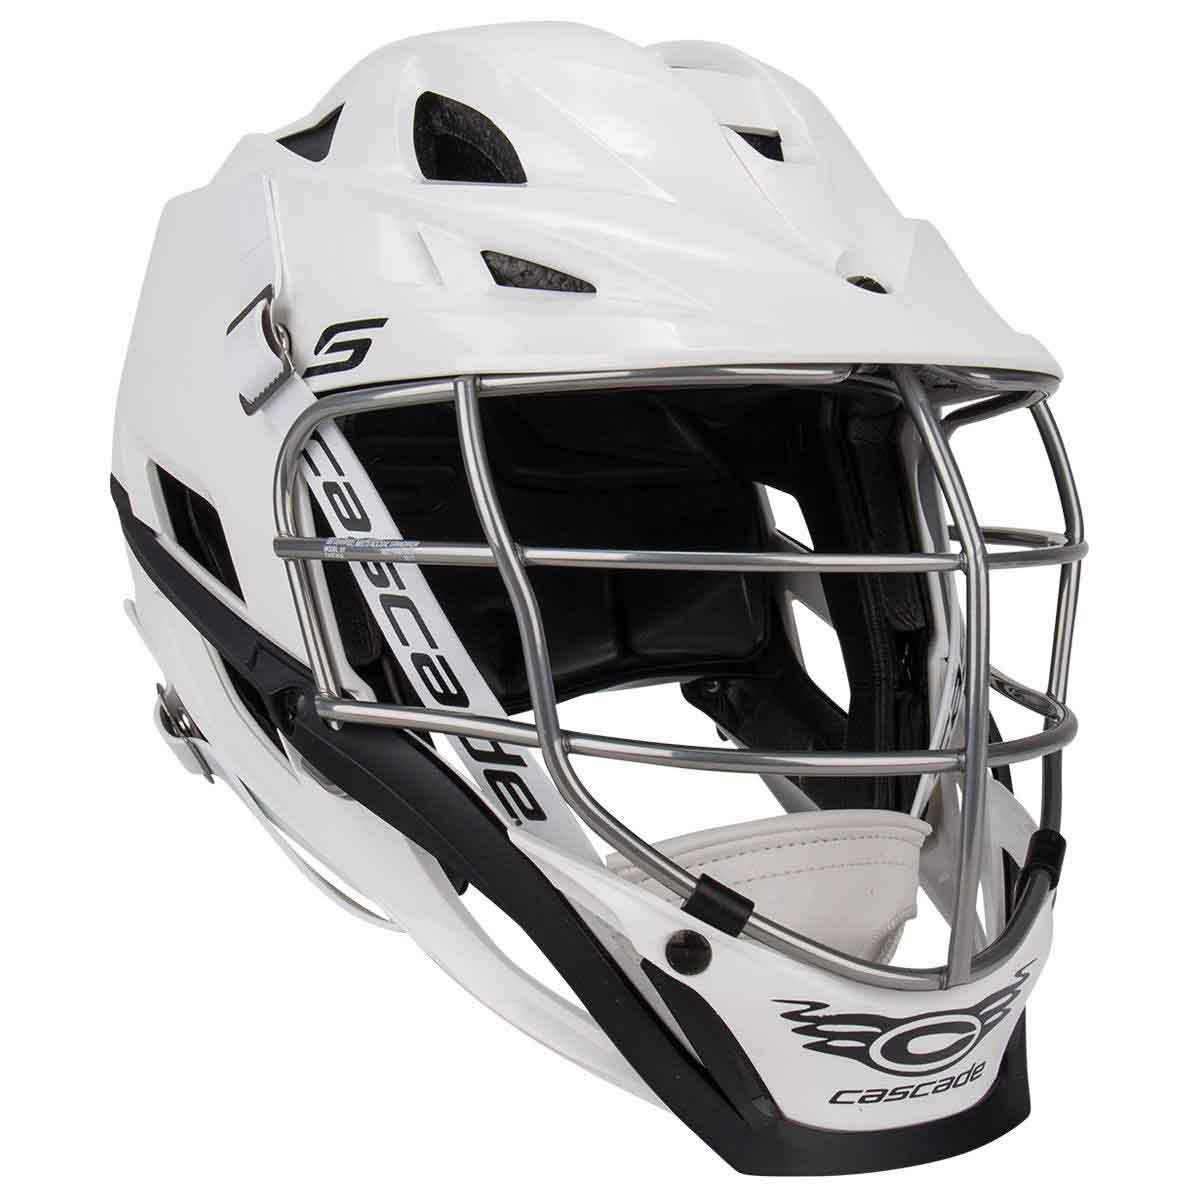 Cascade S Youth Chrome Lacrosse Helmet - One Size